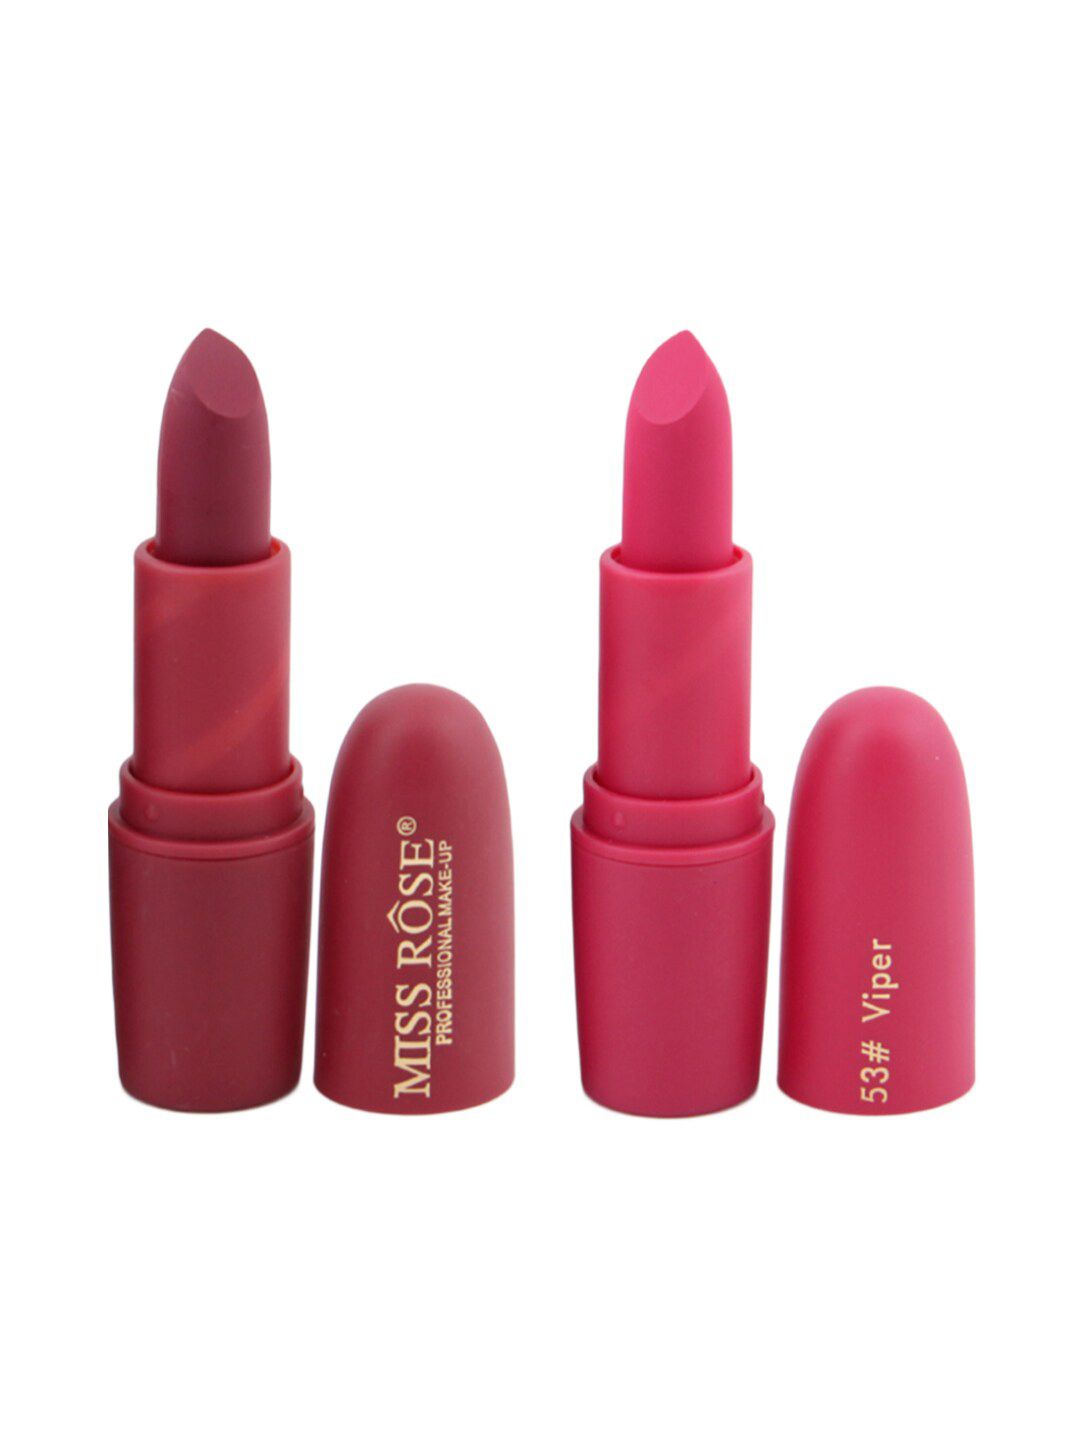 MISS ROSE Set of 2 Matte Creamy Lipsticks - Chii 49 & Viper 53 Price in India